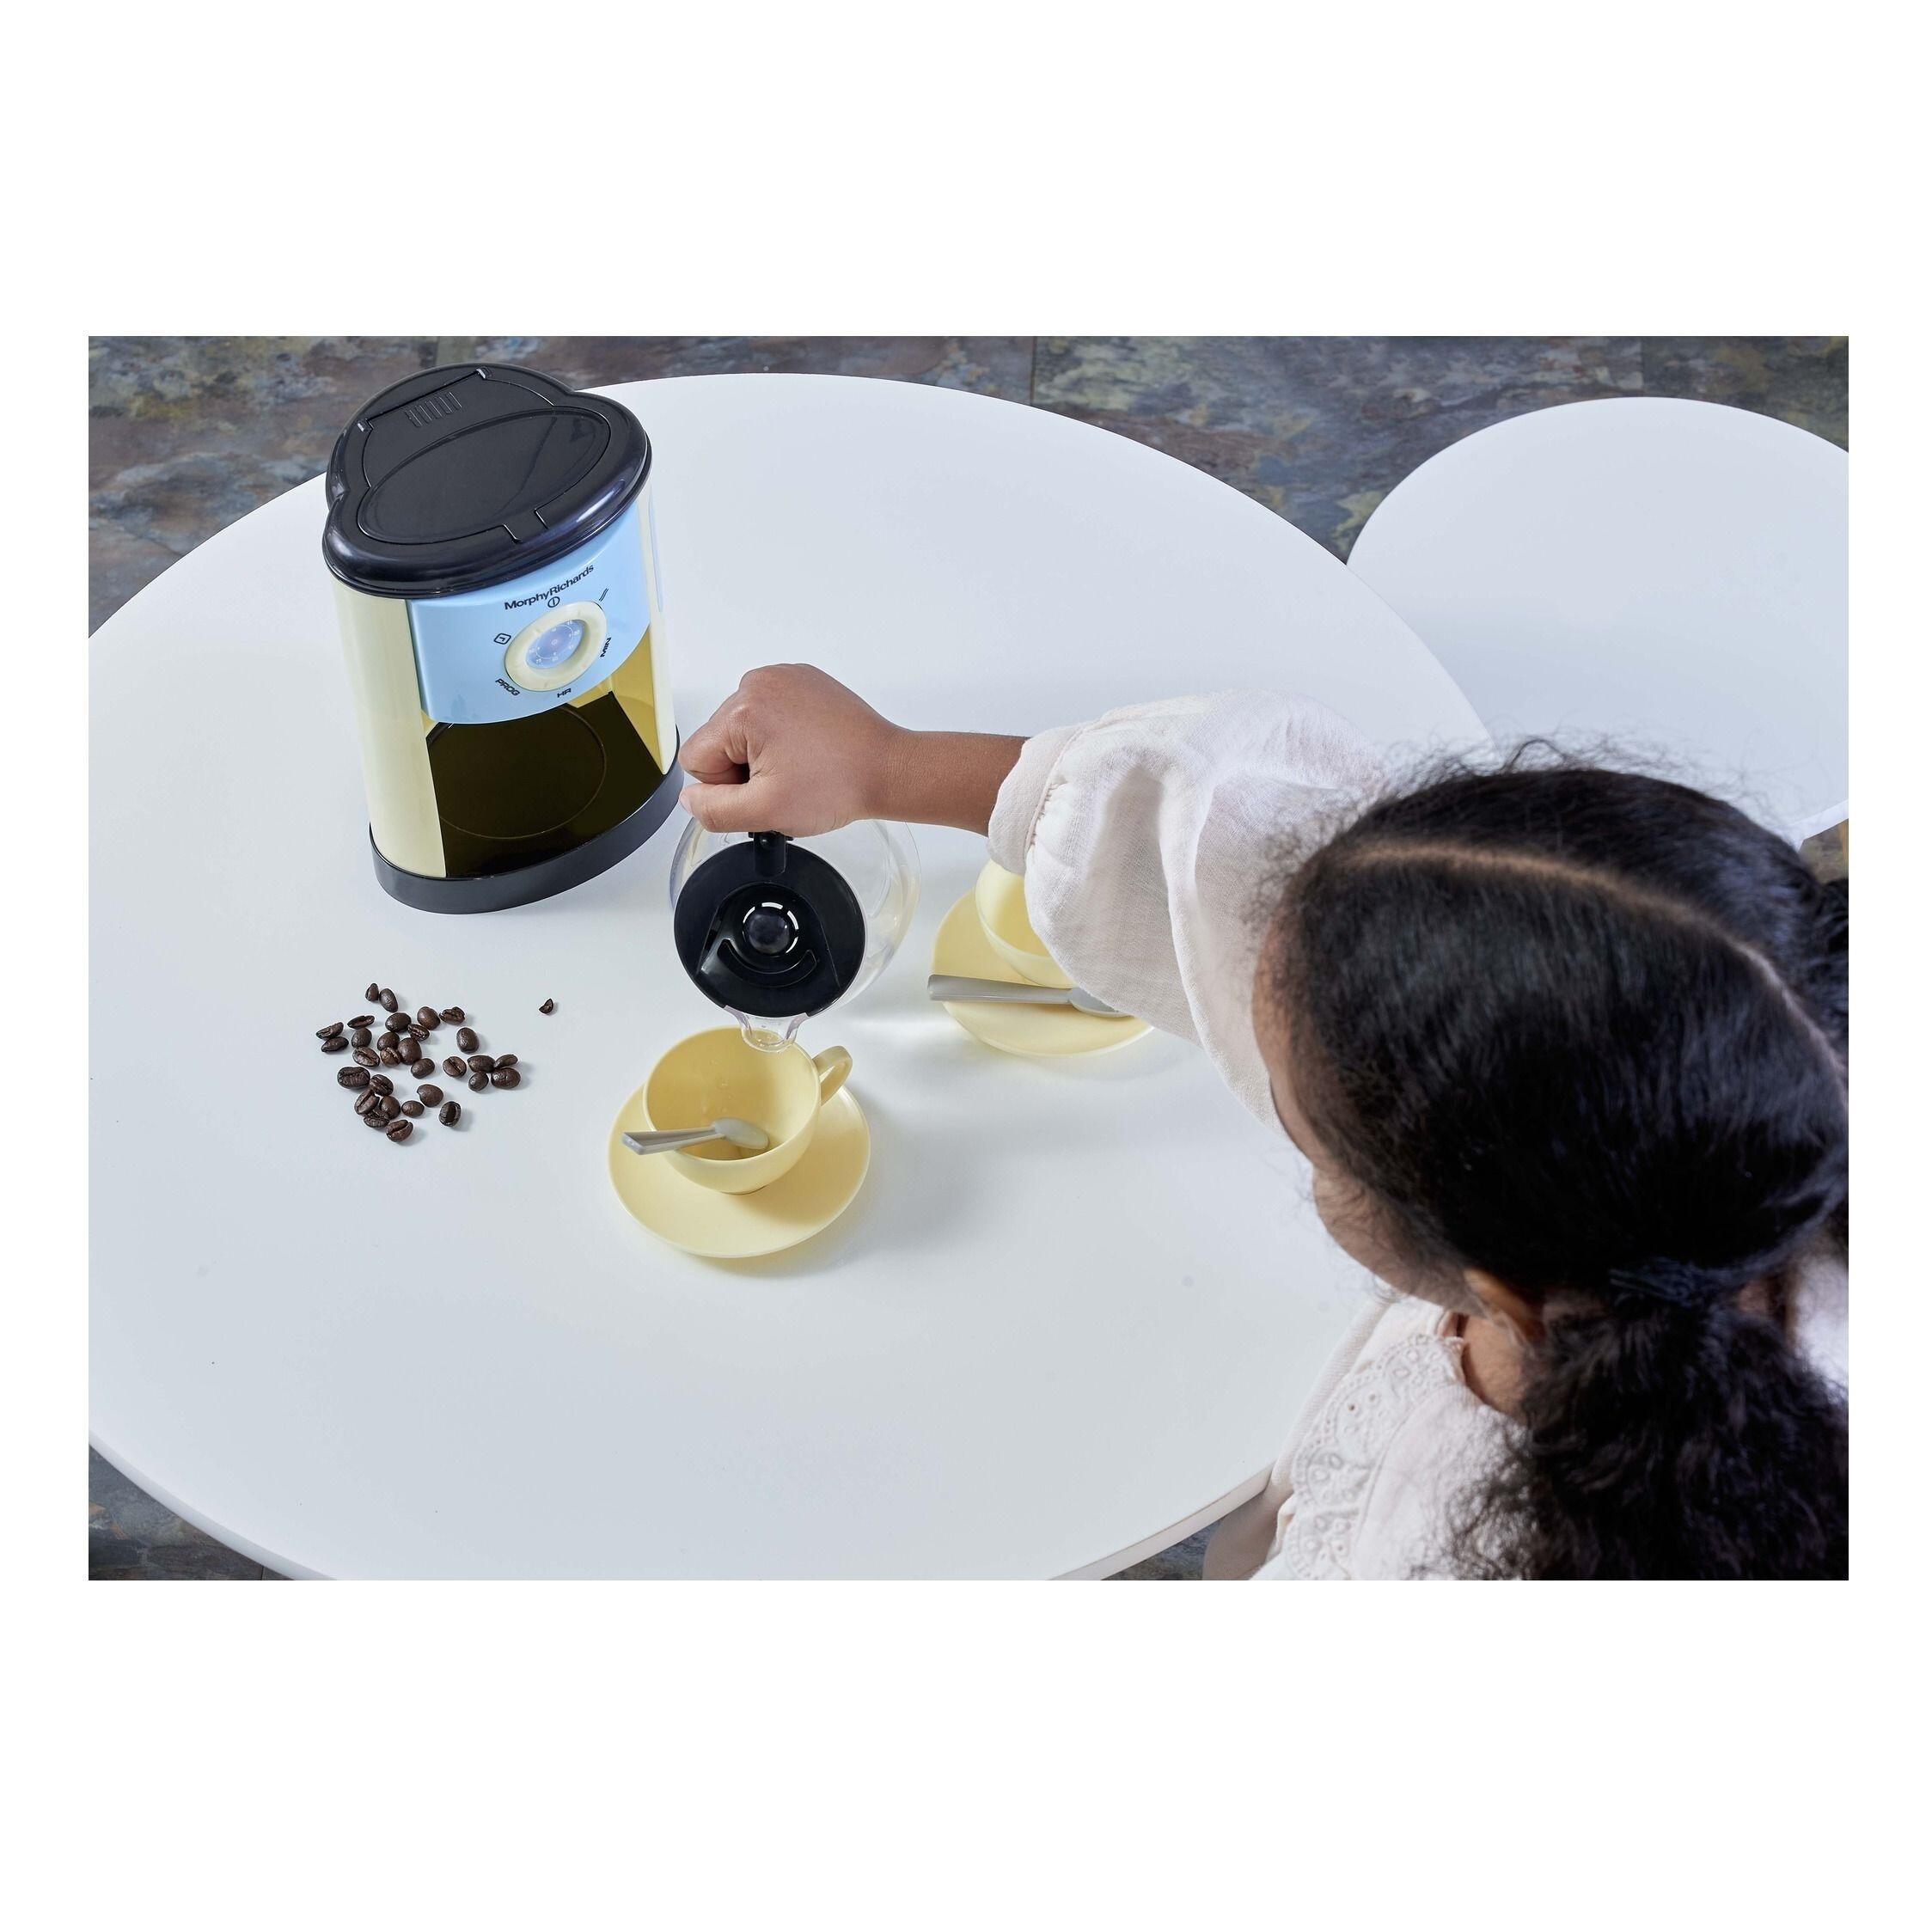 Morphy Richards Children's Coffee Maker & Cups Playset